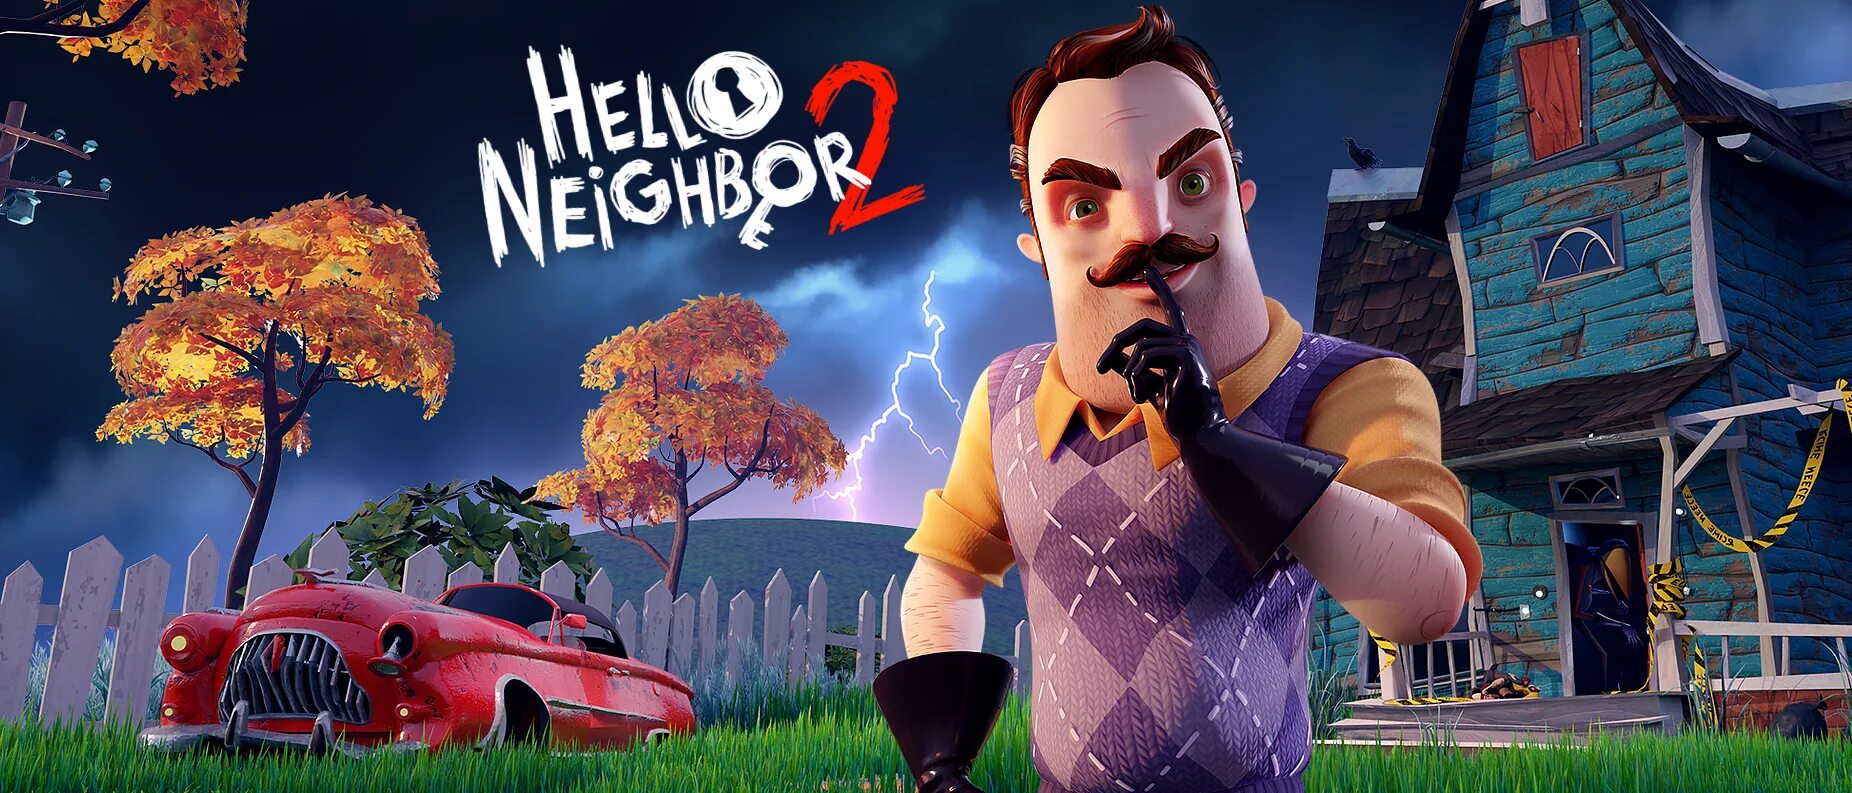 Hello Neighbor 2 сосед. Привет сосед 2 Альфа 1. Привет сосед сосед Альфа 1. Сосед Альфа 1 игры. Привет сосед прыжки